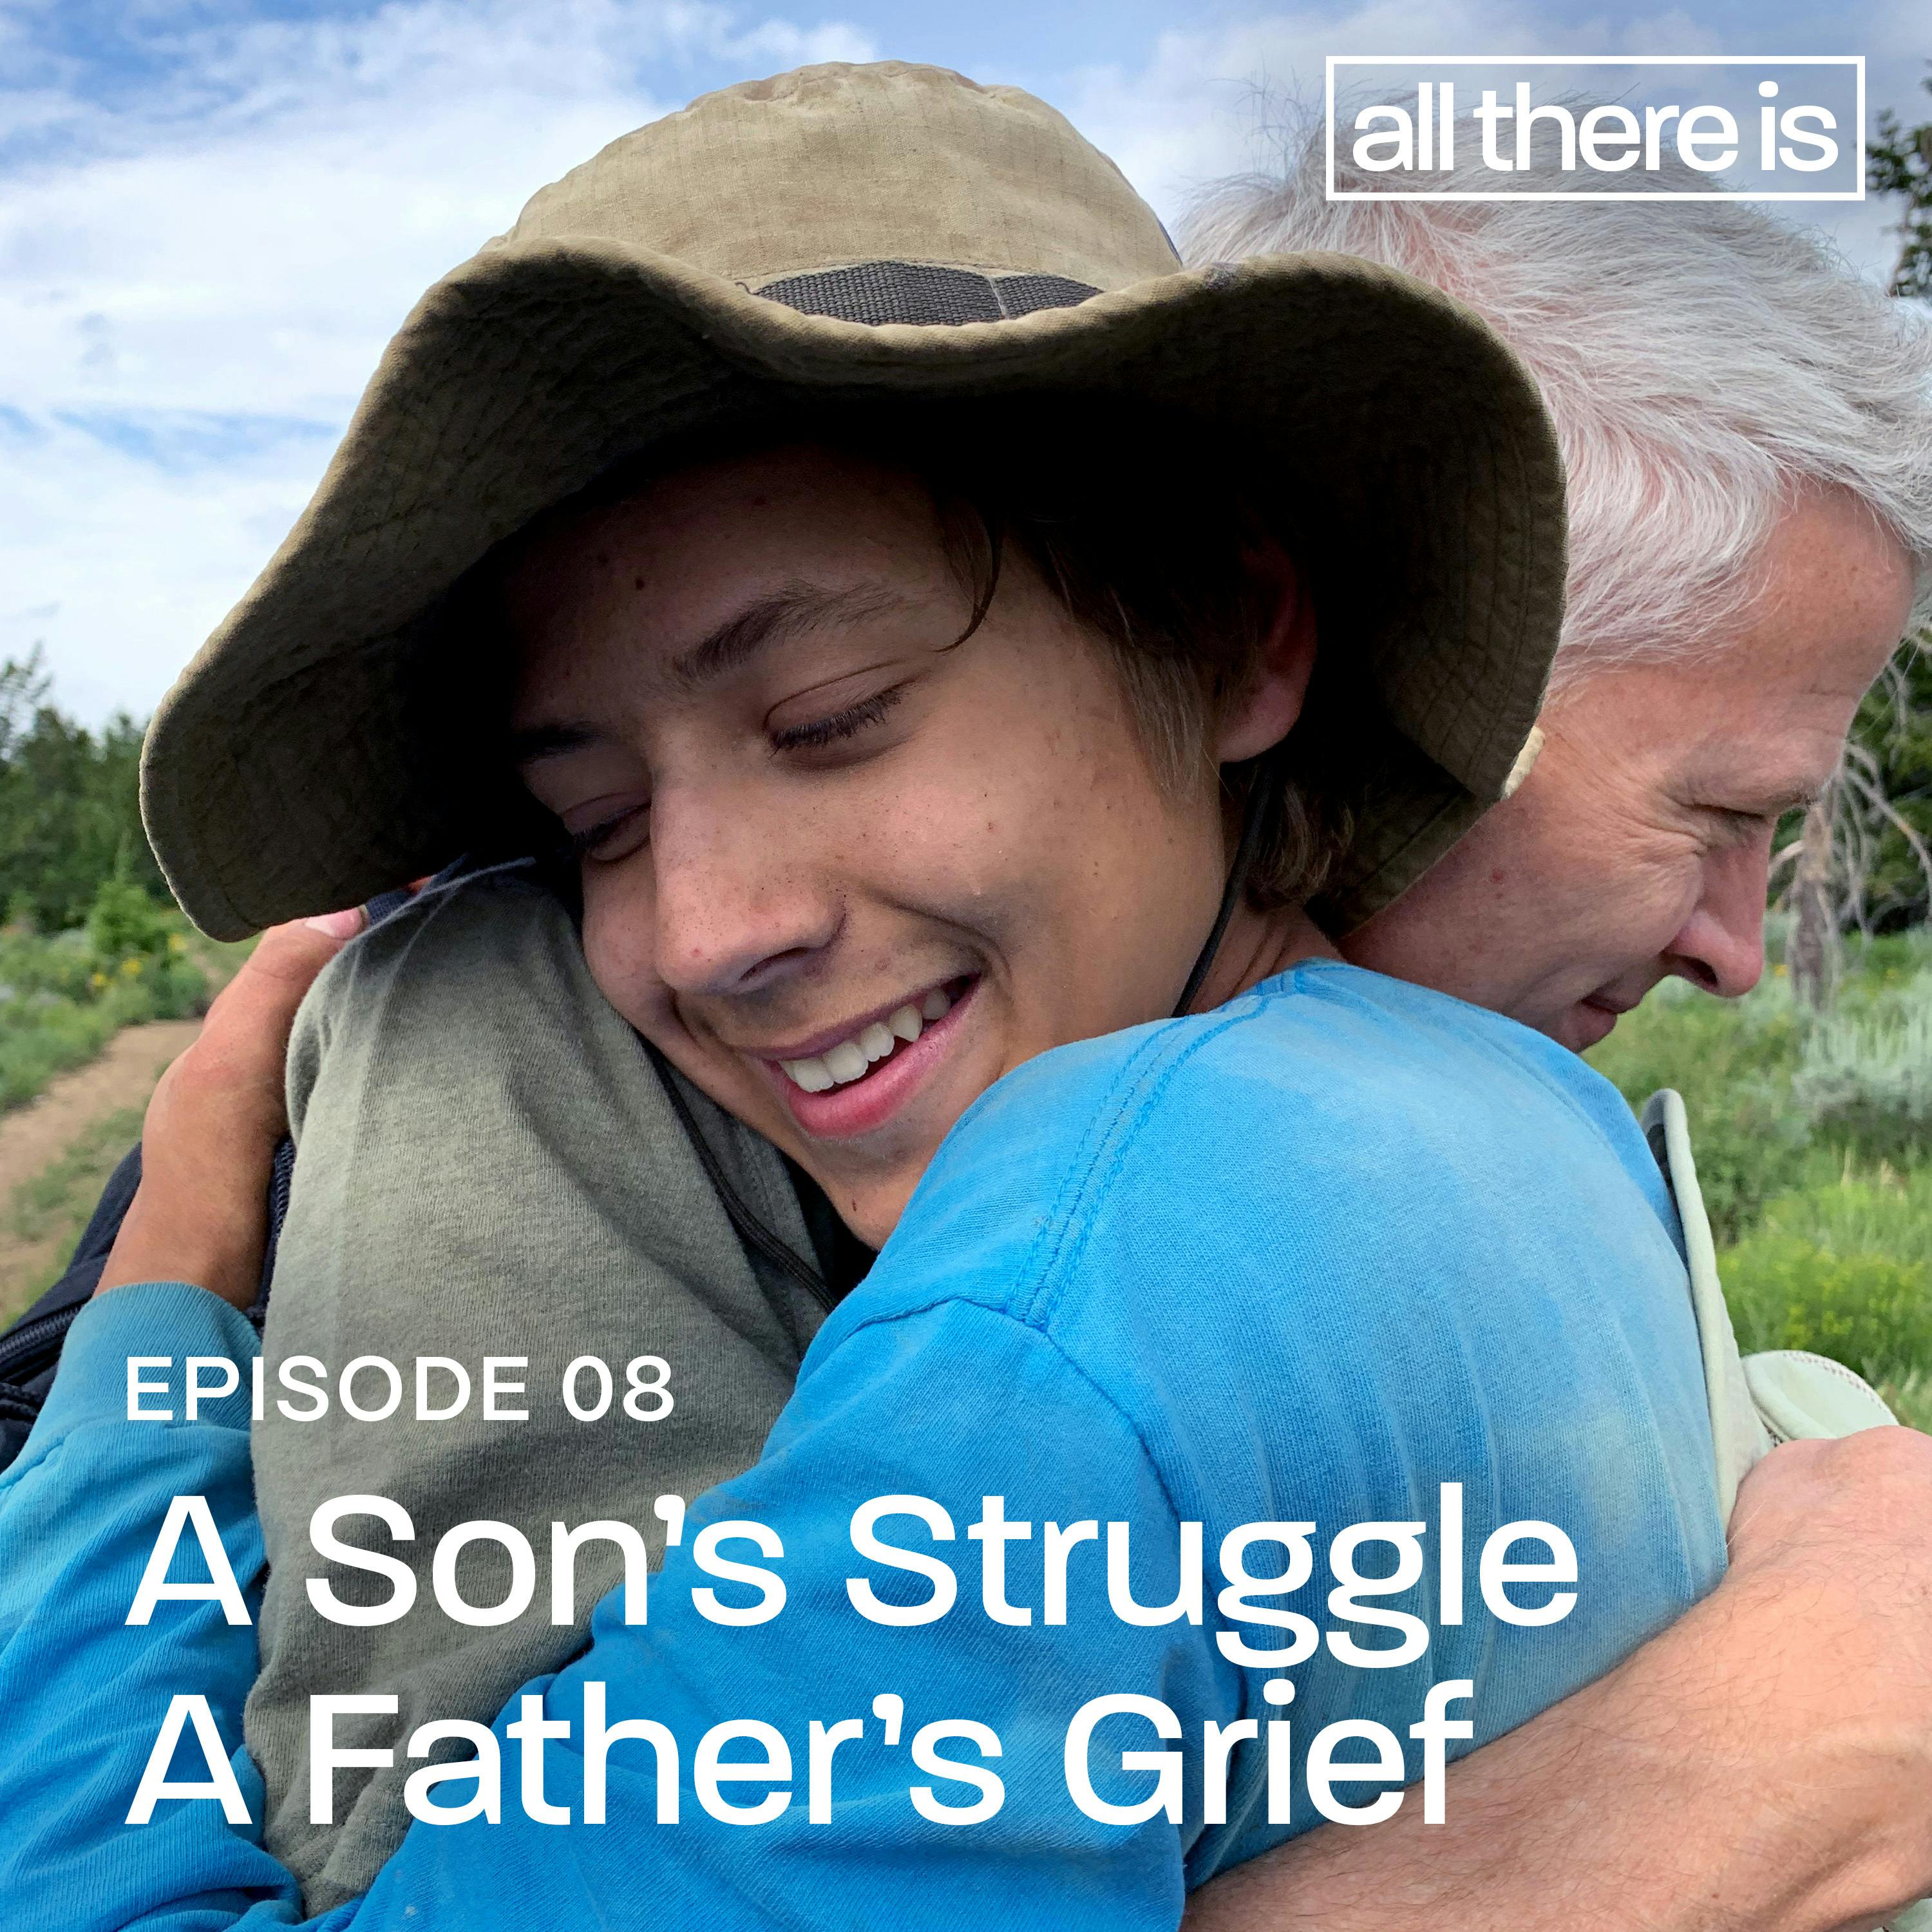 A Son’s Struggle, A Father’s Grief